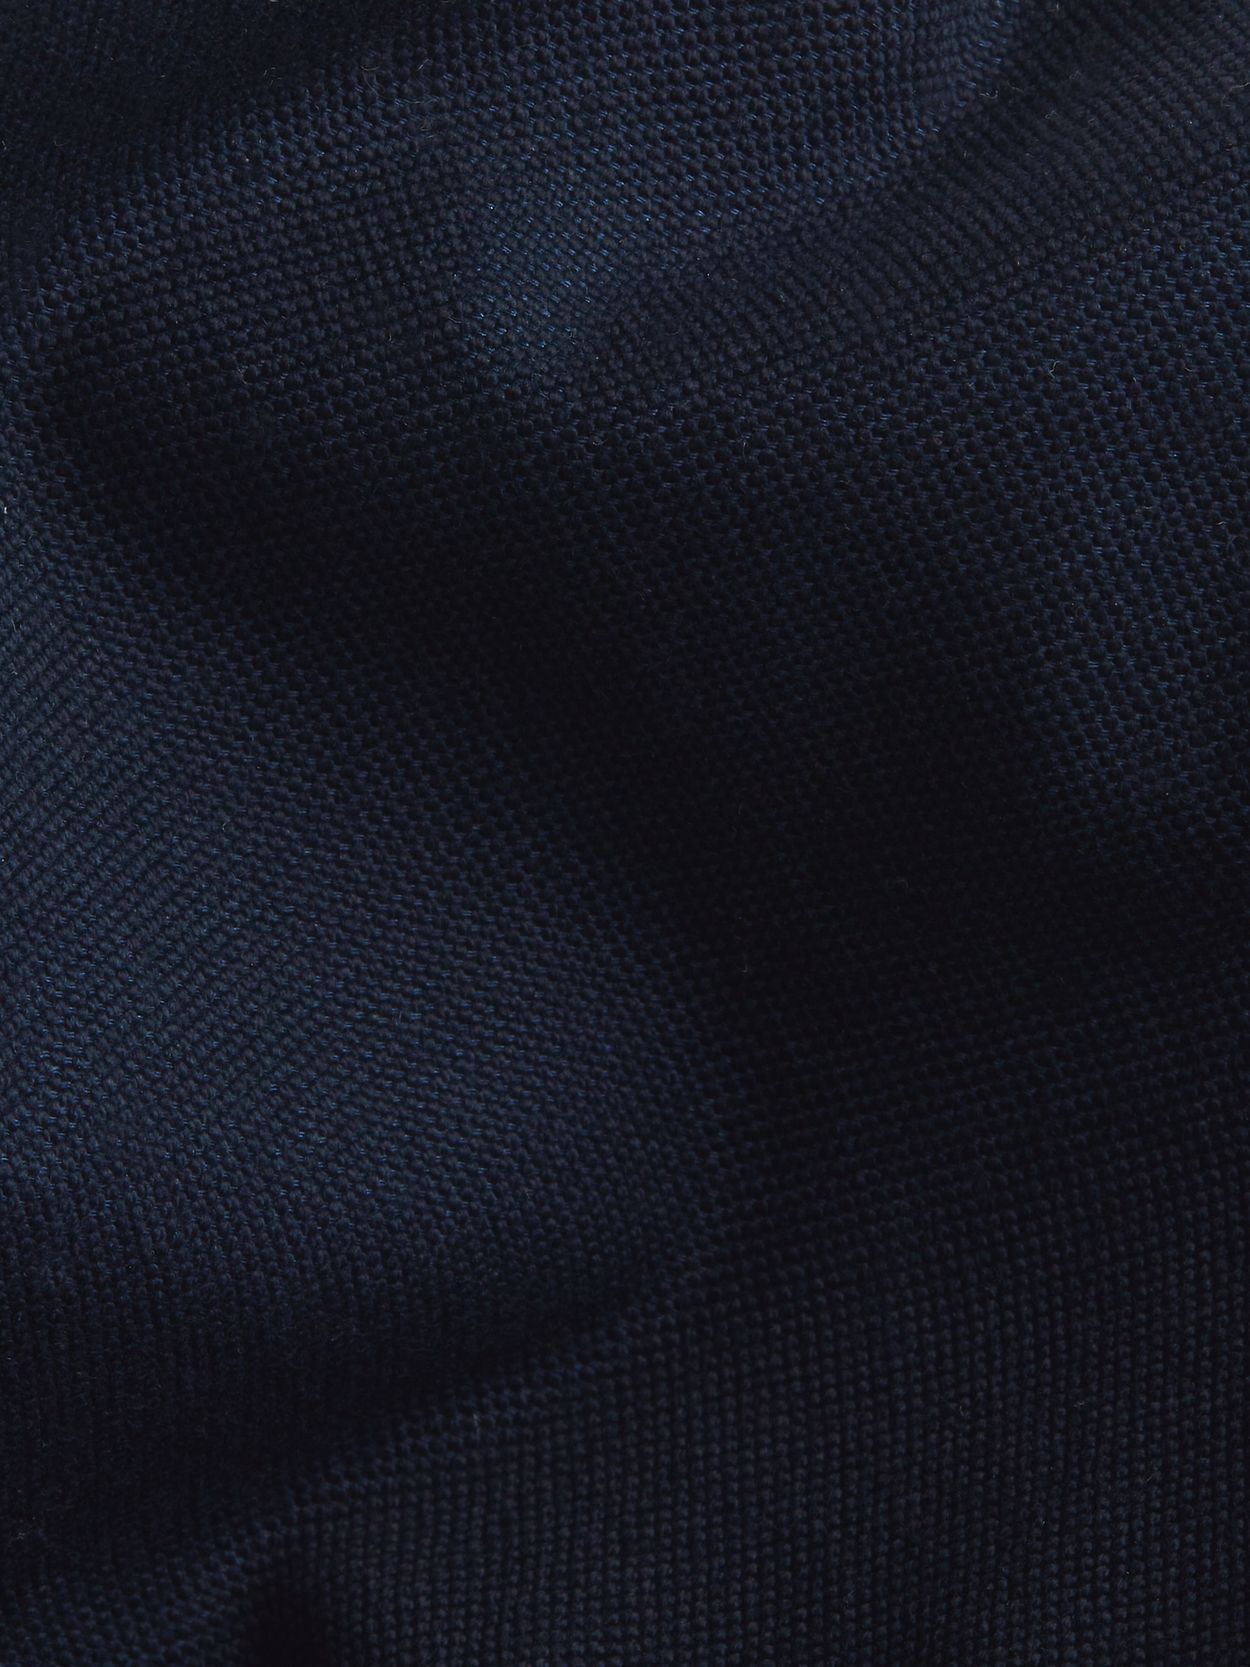 Dark Blue Oxford Shirt